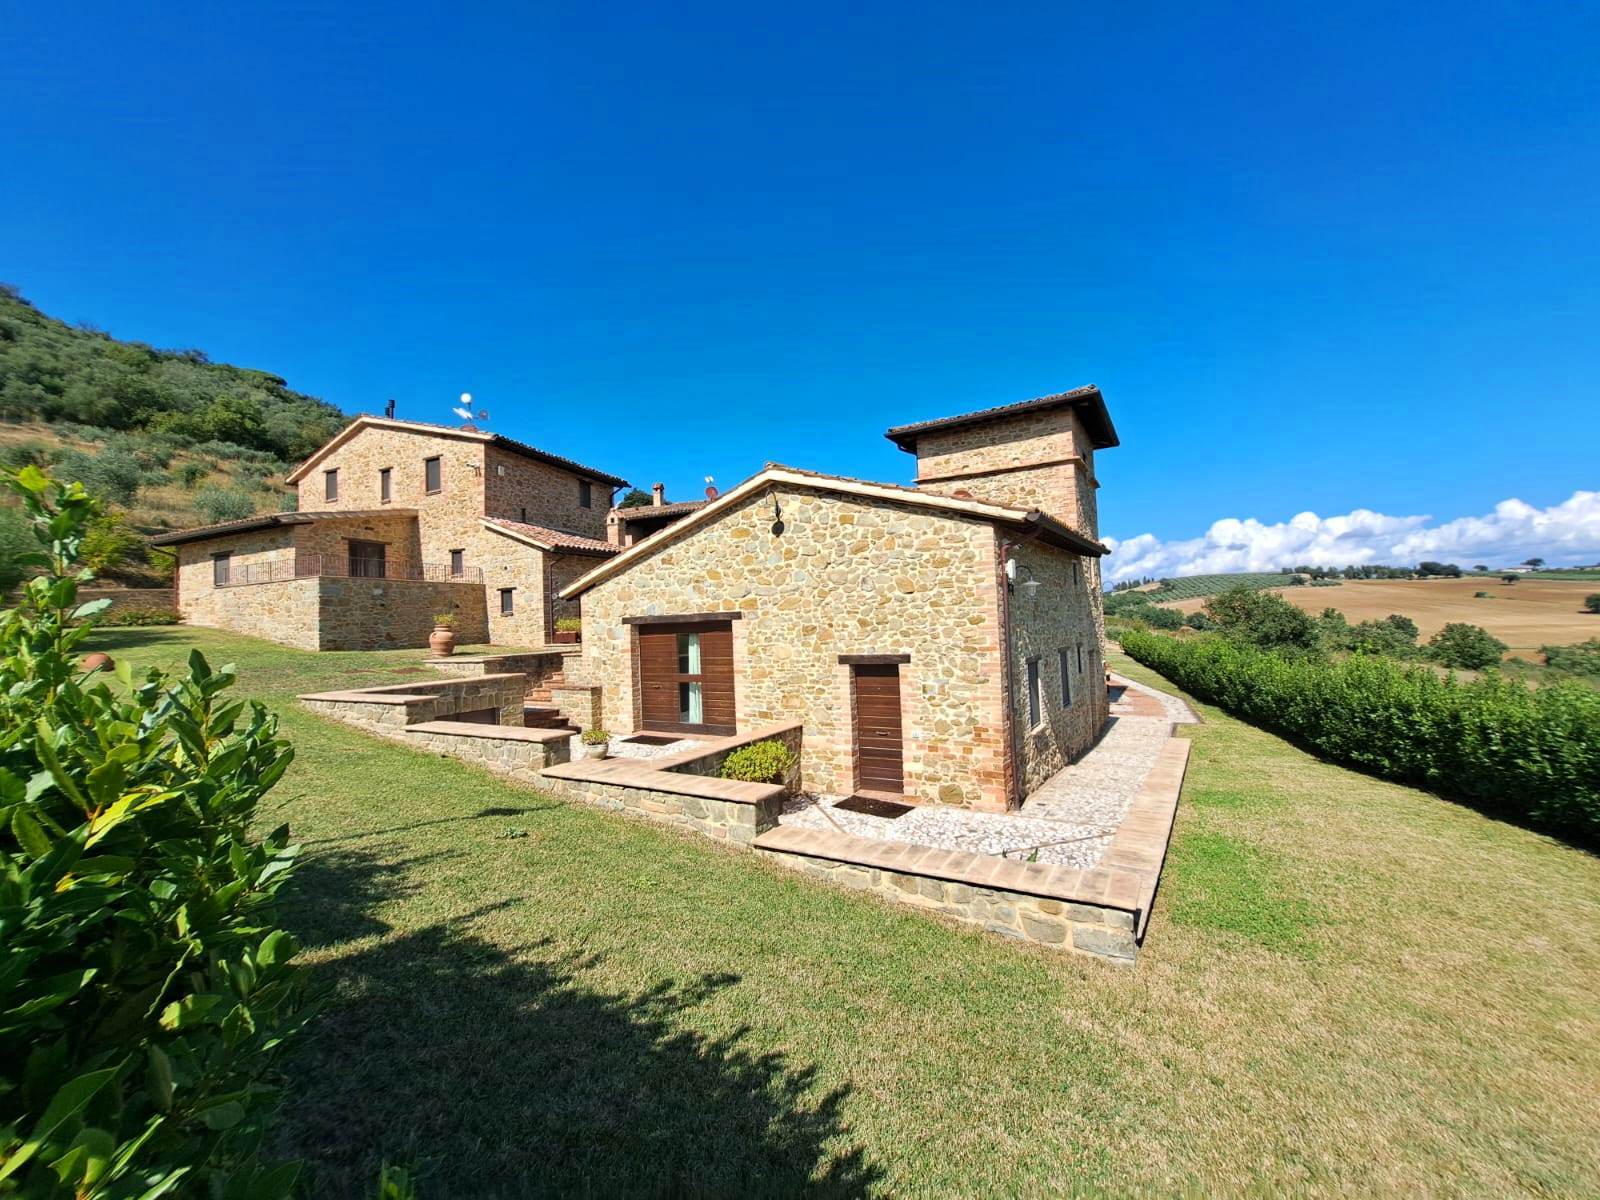 For sale cottage in quiet zone Marsciano Umbria